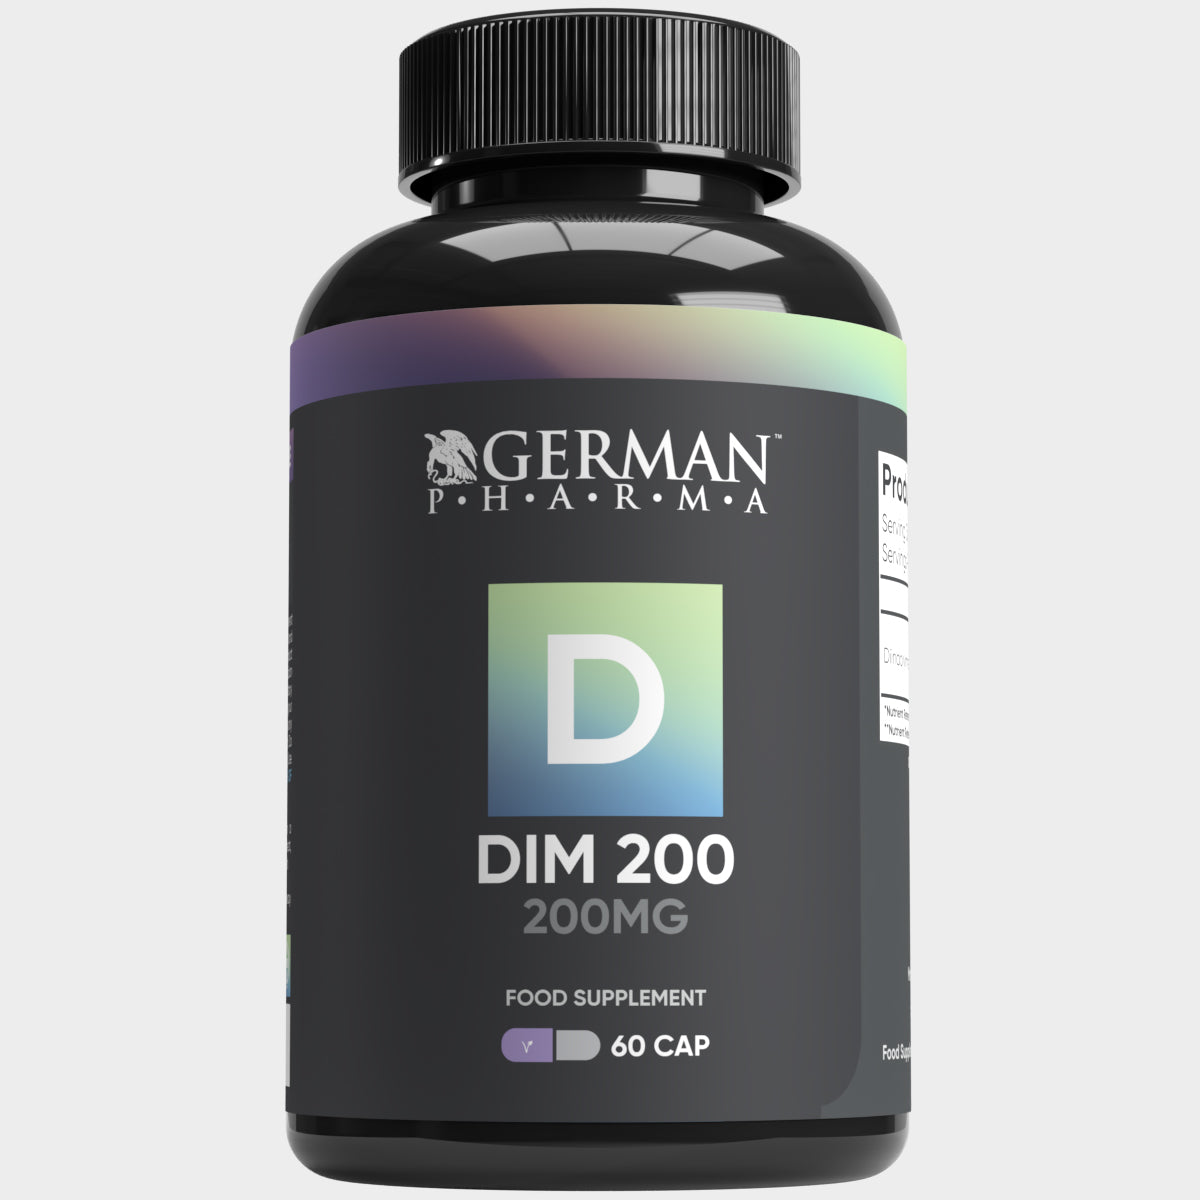 DIM 200, Diindolylmethane, supporting hormonal balance